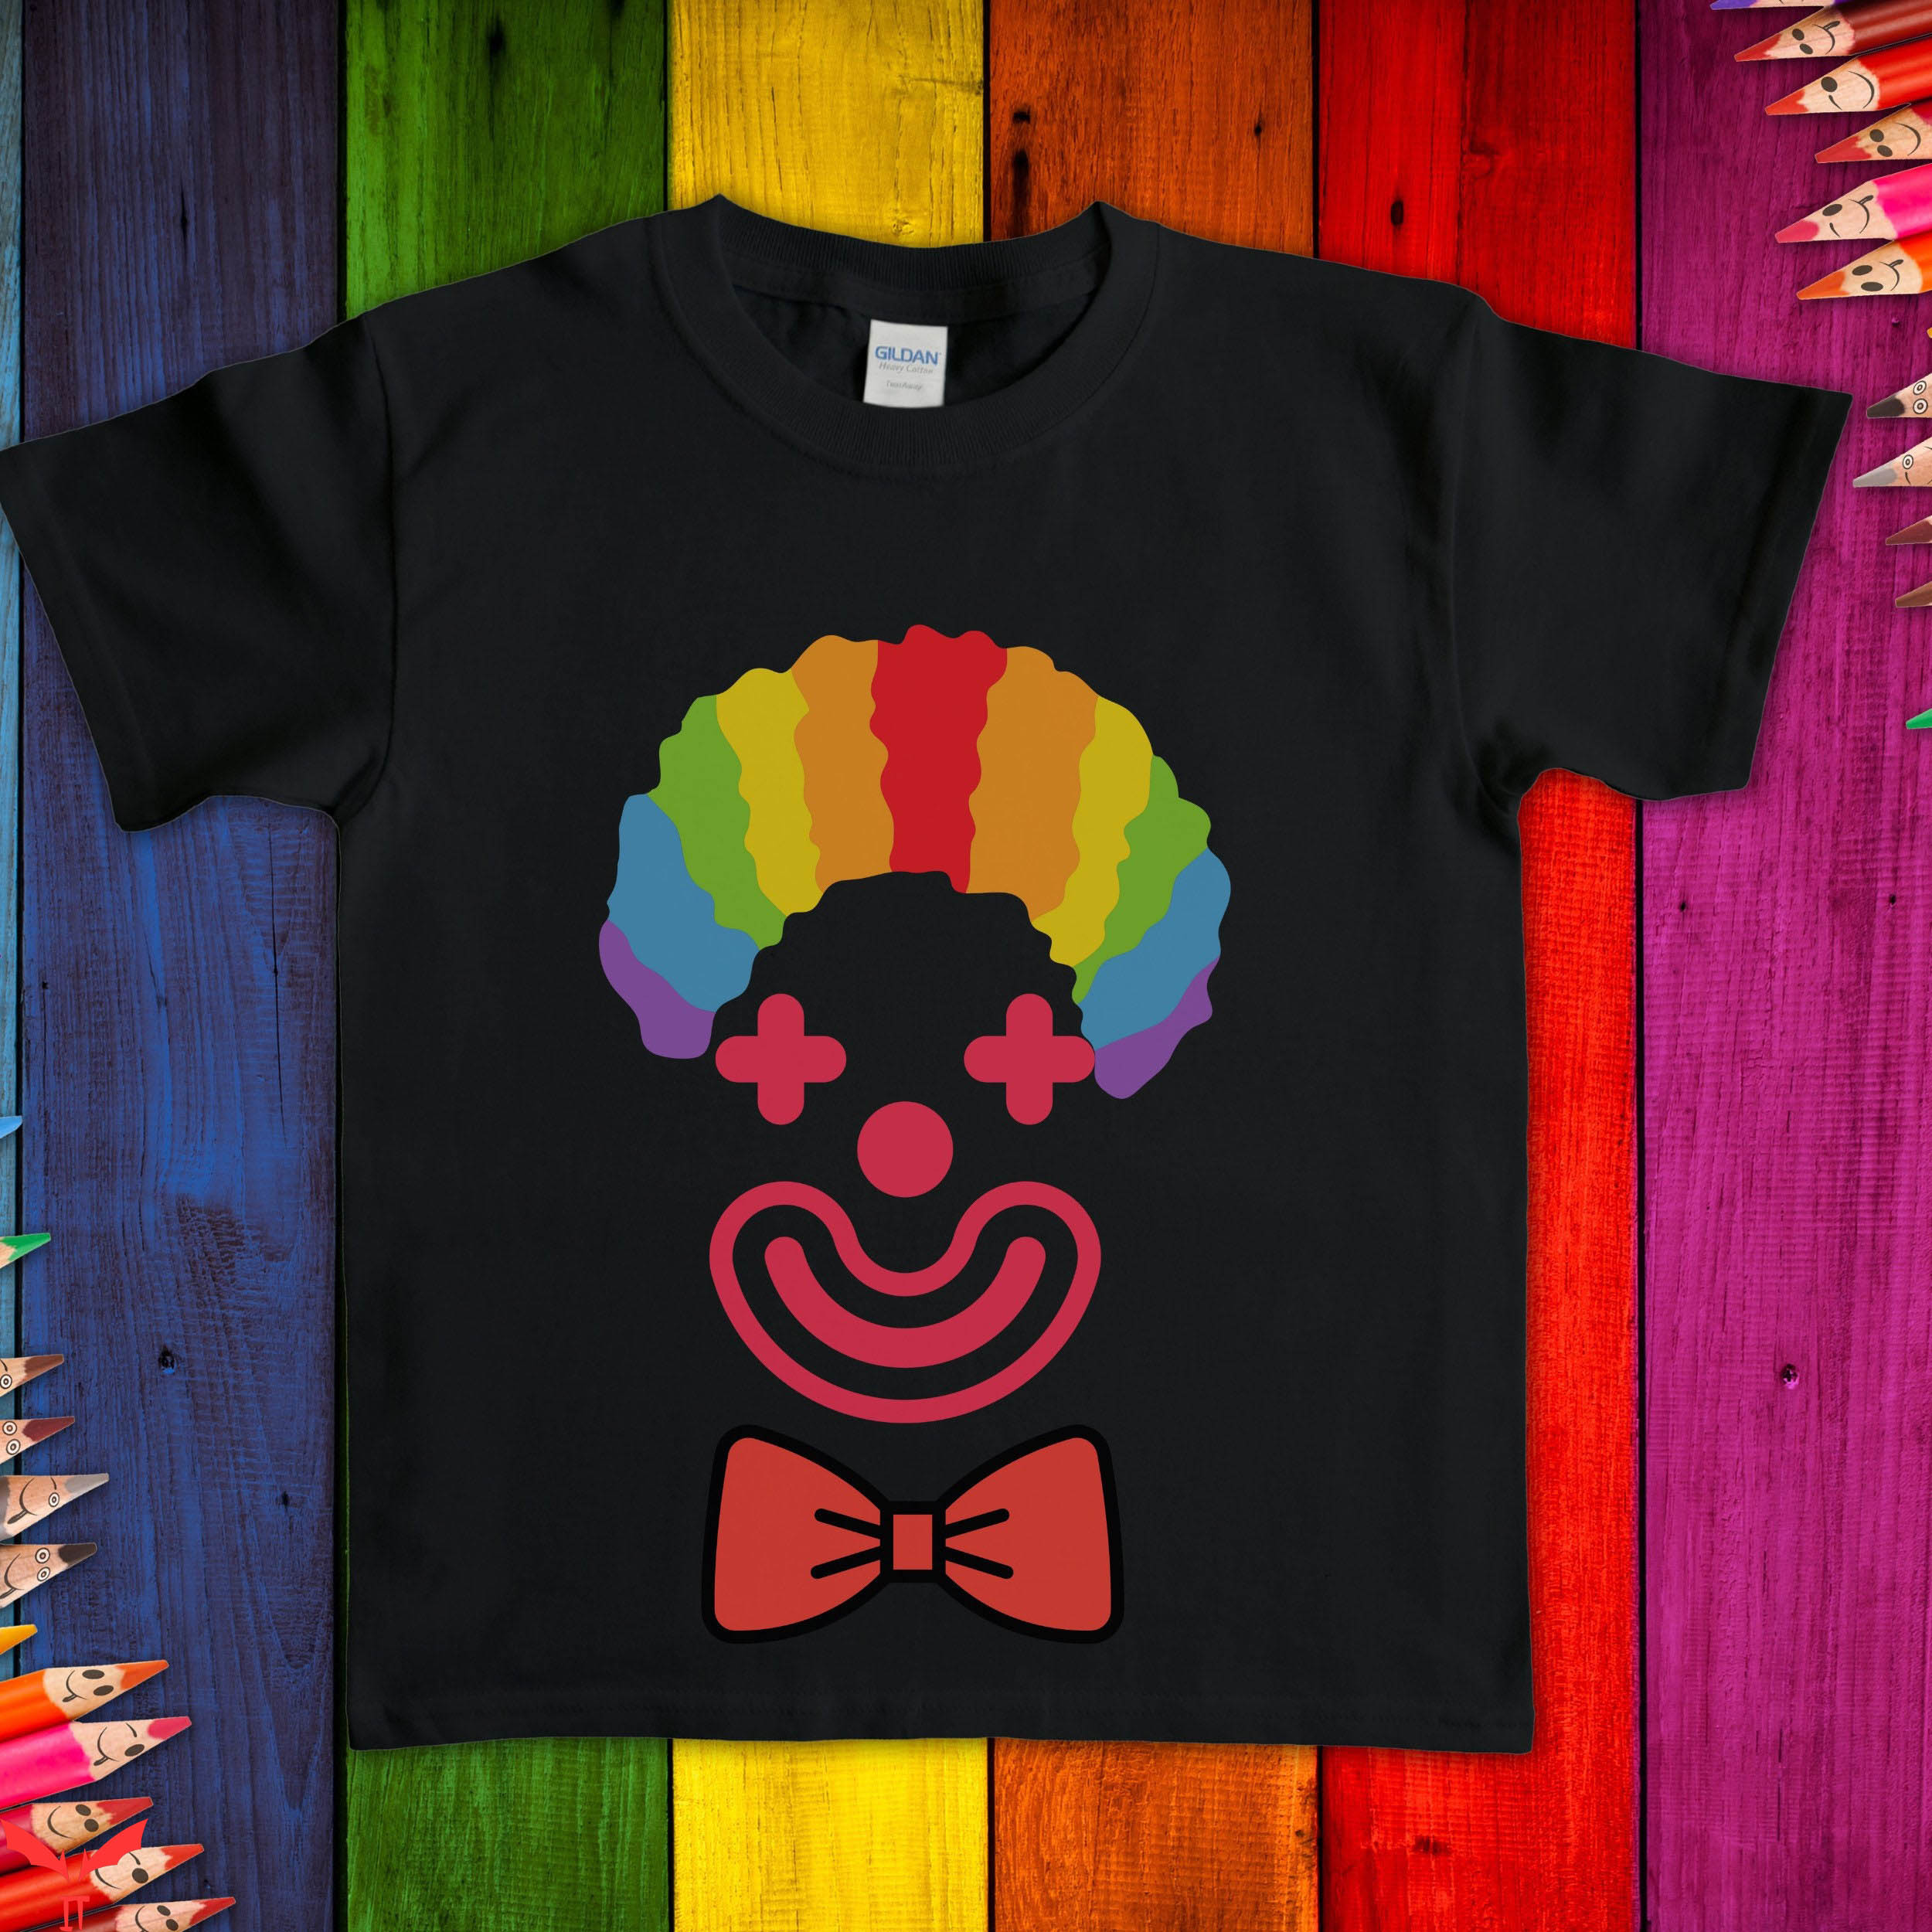 IT The Clown T-Shirt Rainbow Scary Clown IT The Movie